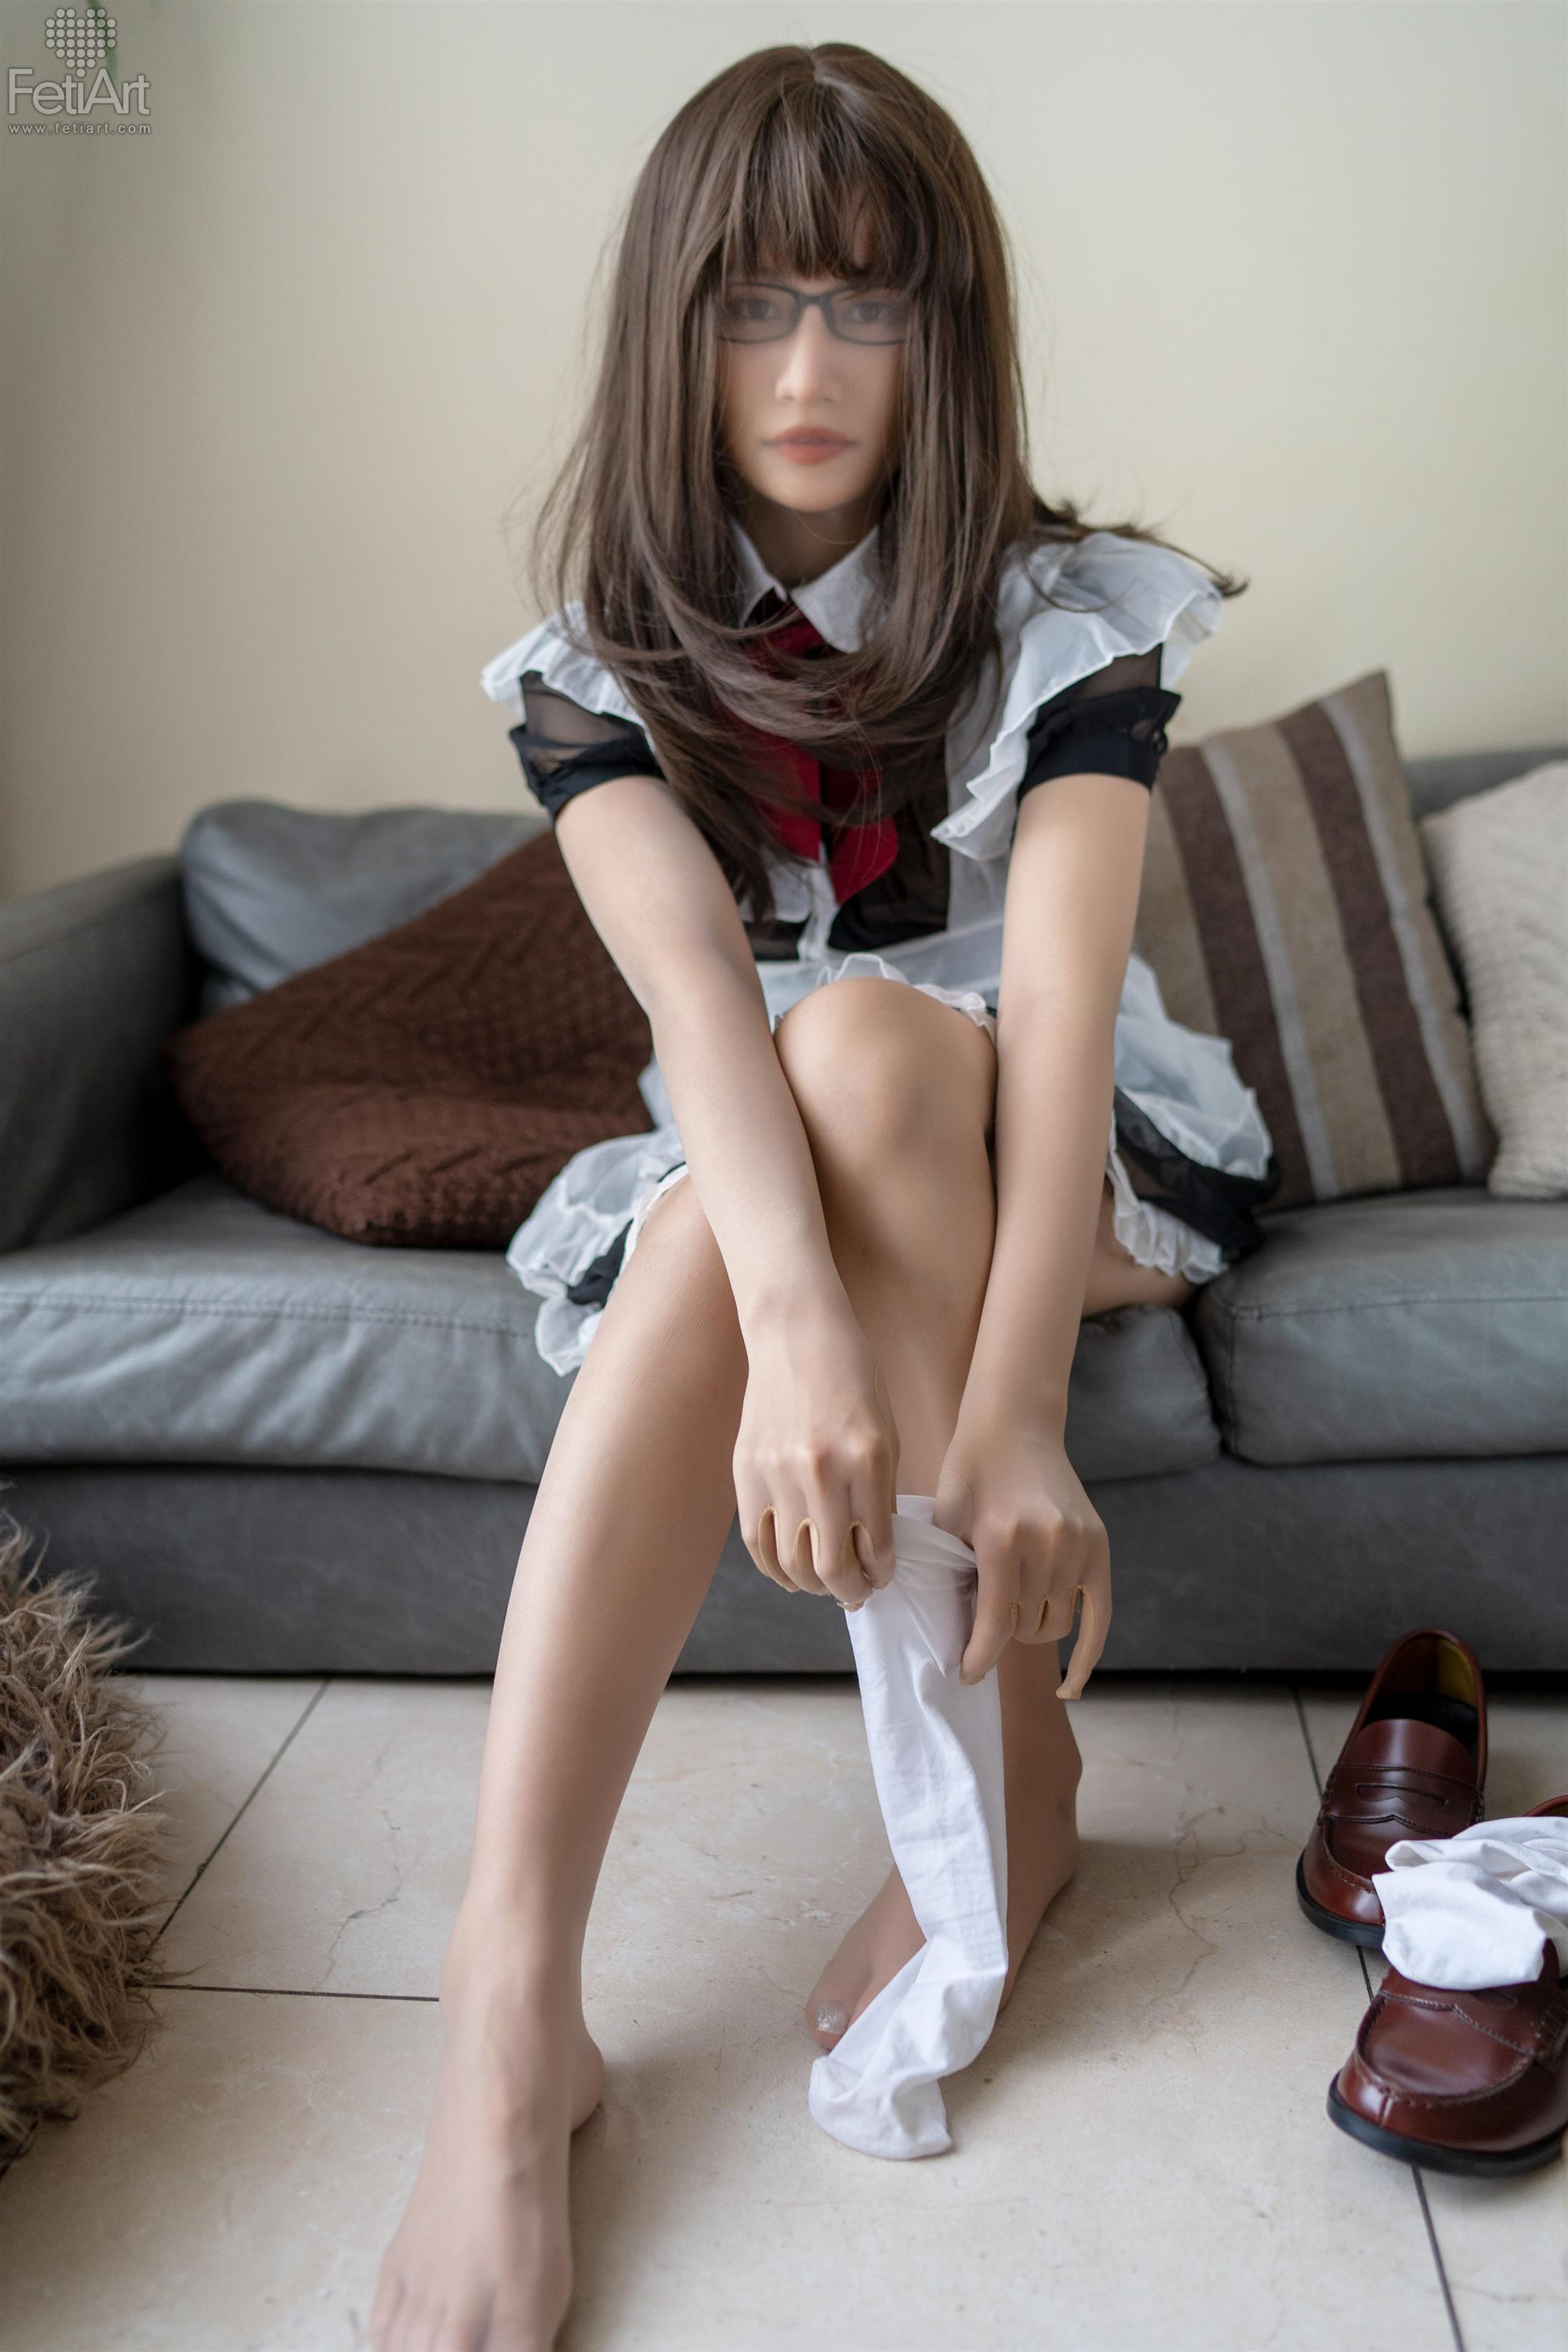 FetiArt尚物集 NO.00048 Pantyhose Encasement Maid MODEL Jasmine - 34.jpg